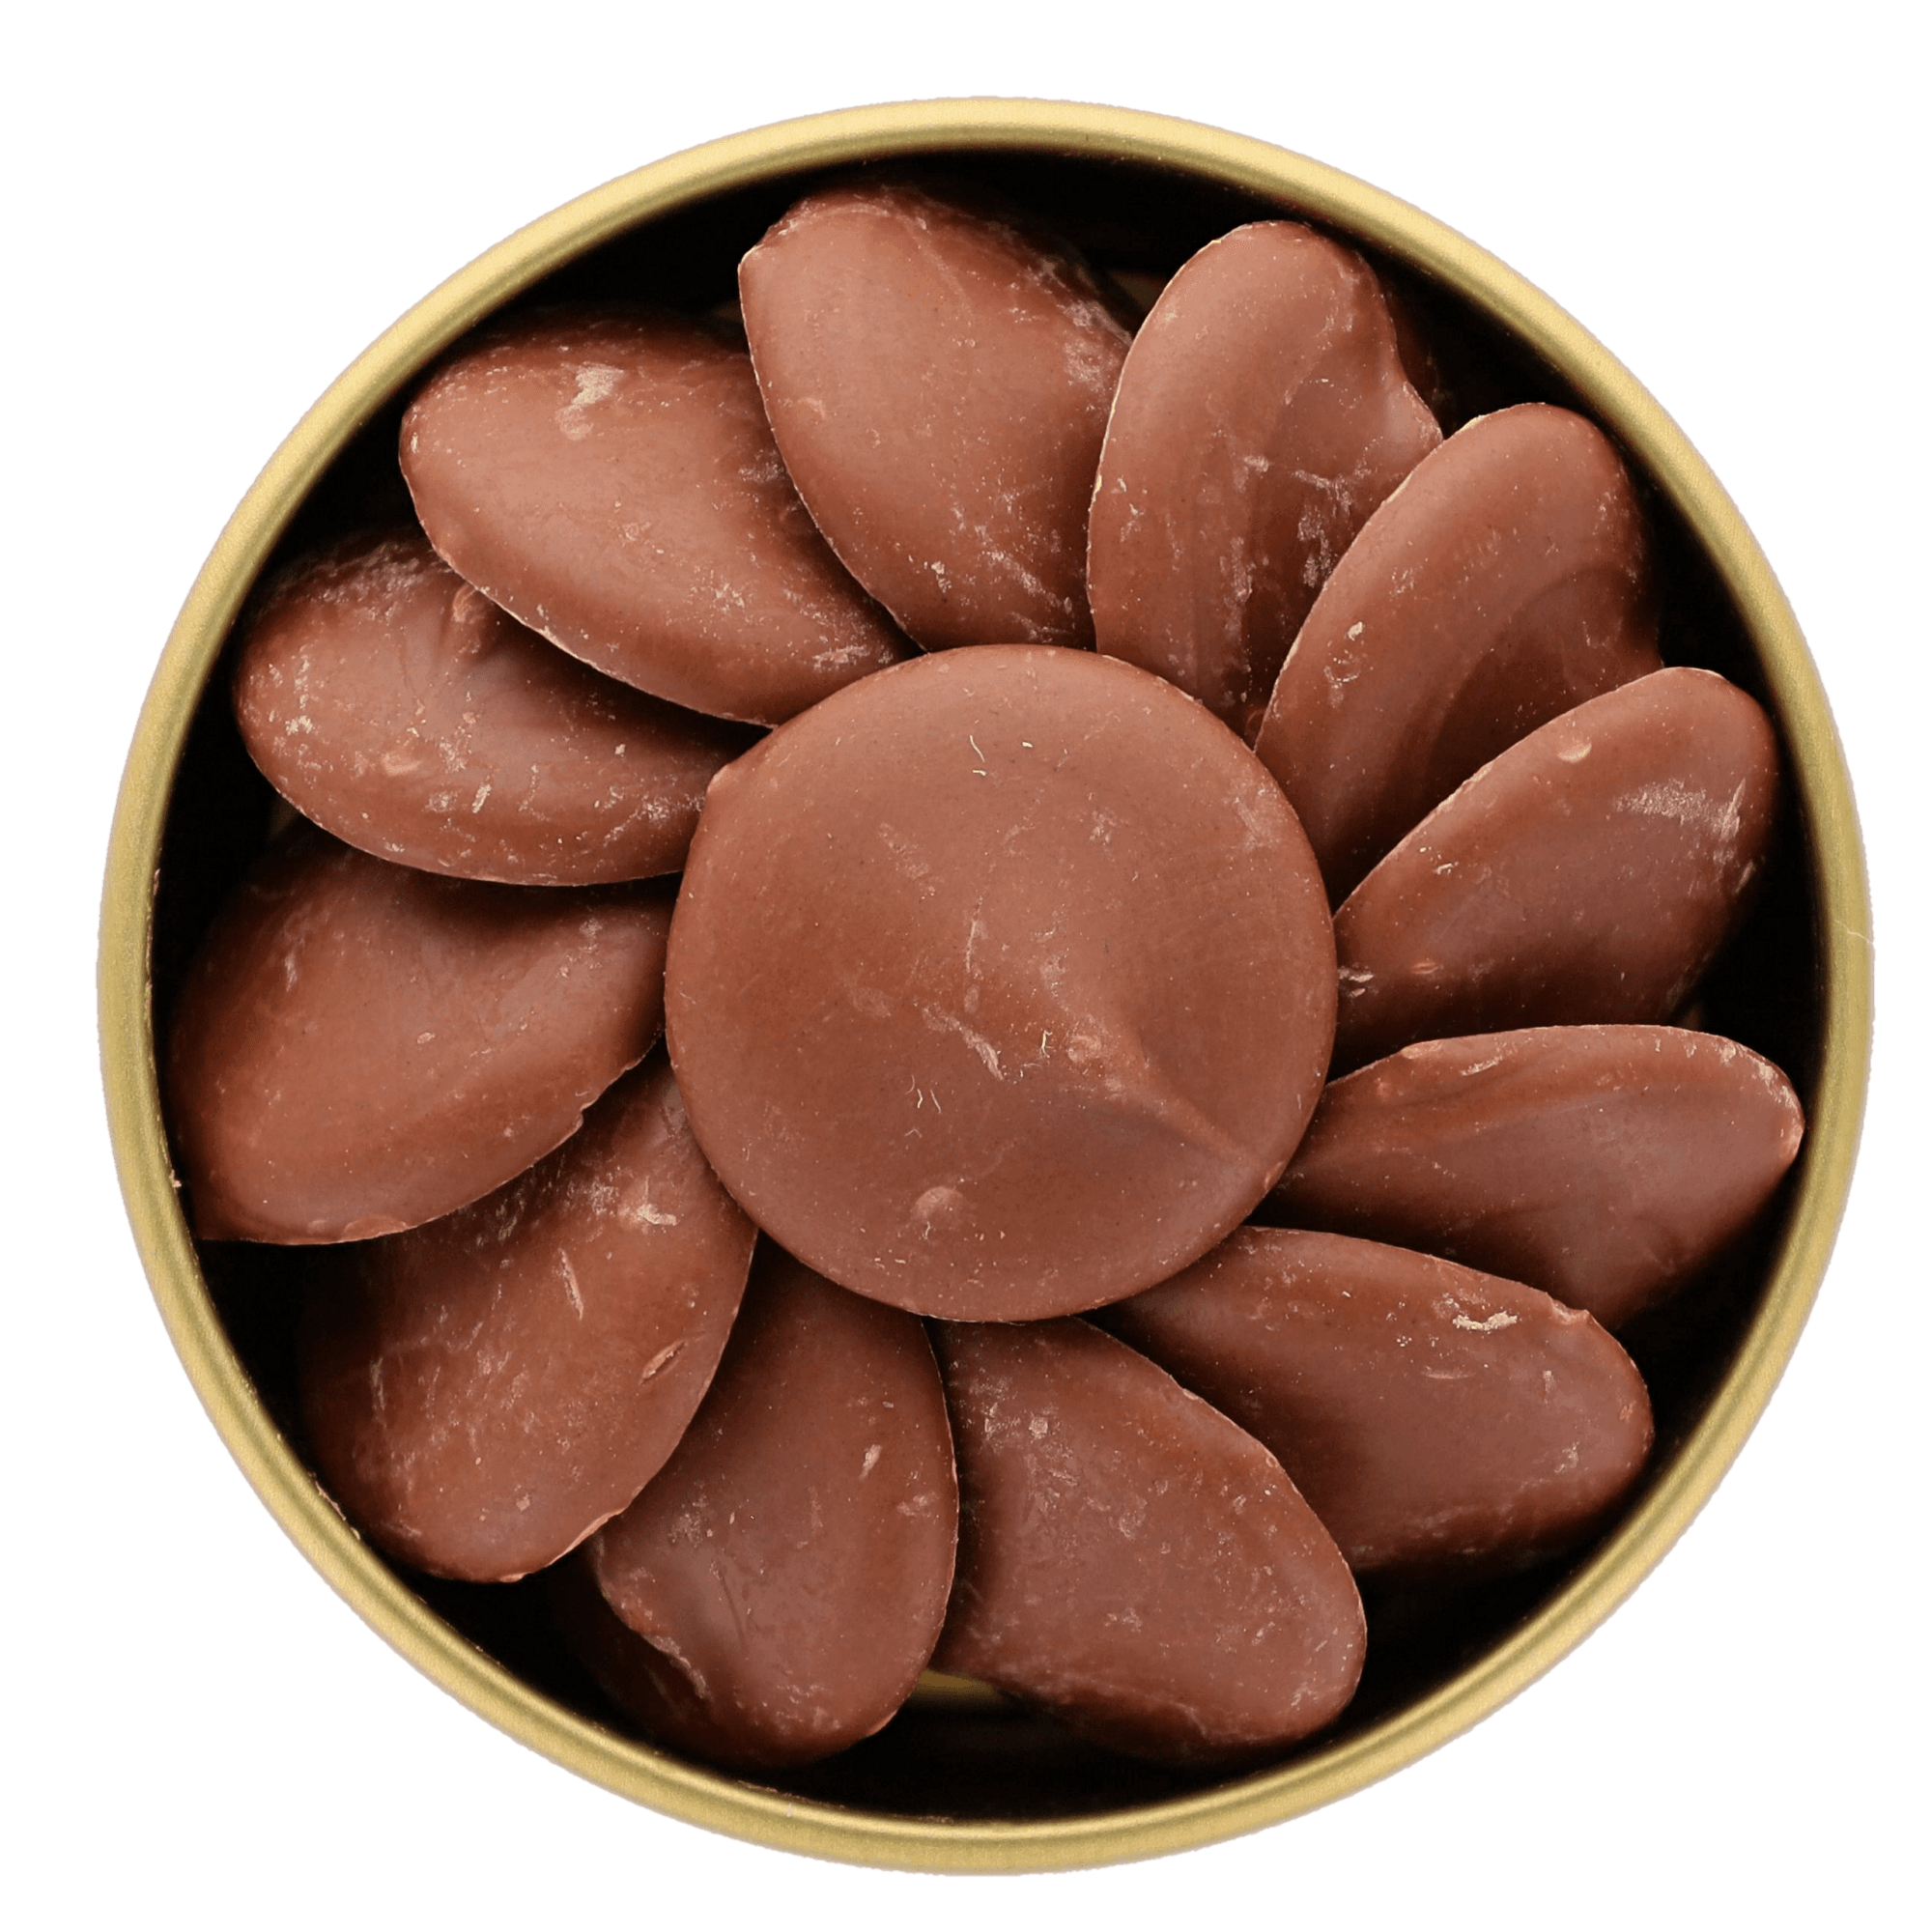 Caramelatte Chocolate Couverture Milk 35% - Savory Gourmet